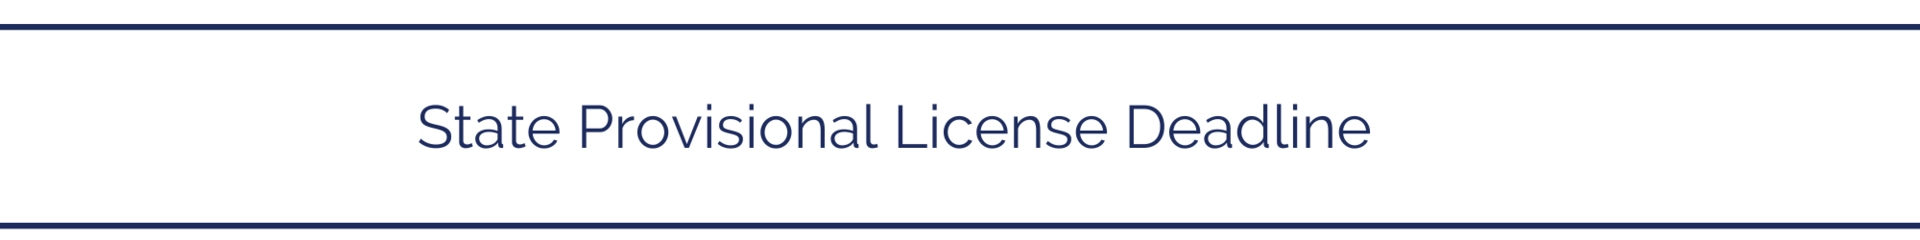 State Provisional License Deadline